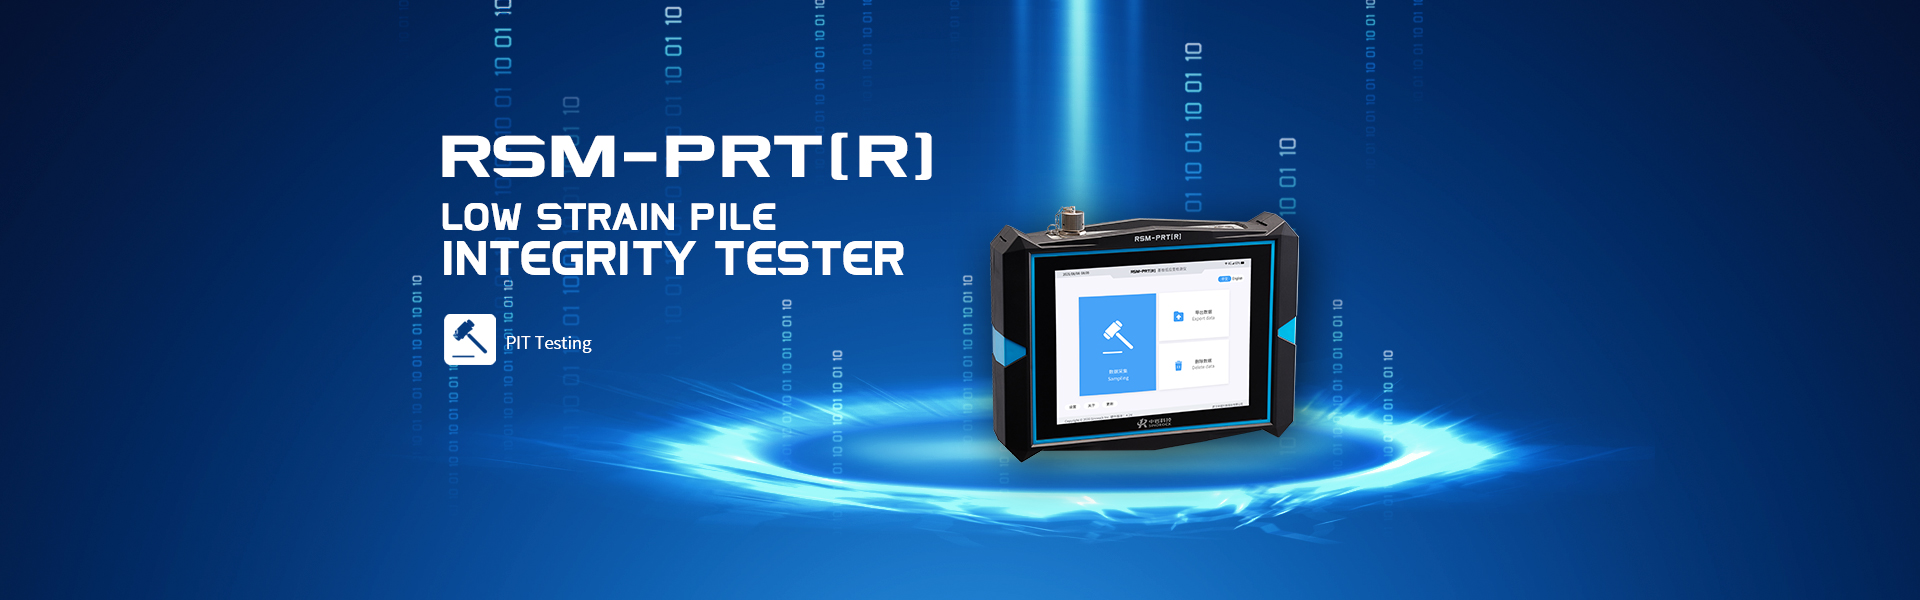 RSM-PRT(R) Low Strain Pile Integrity Tester